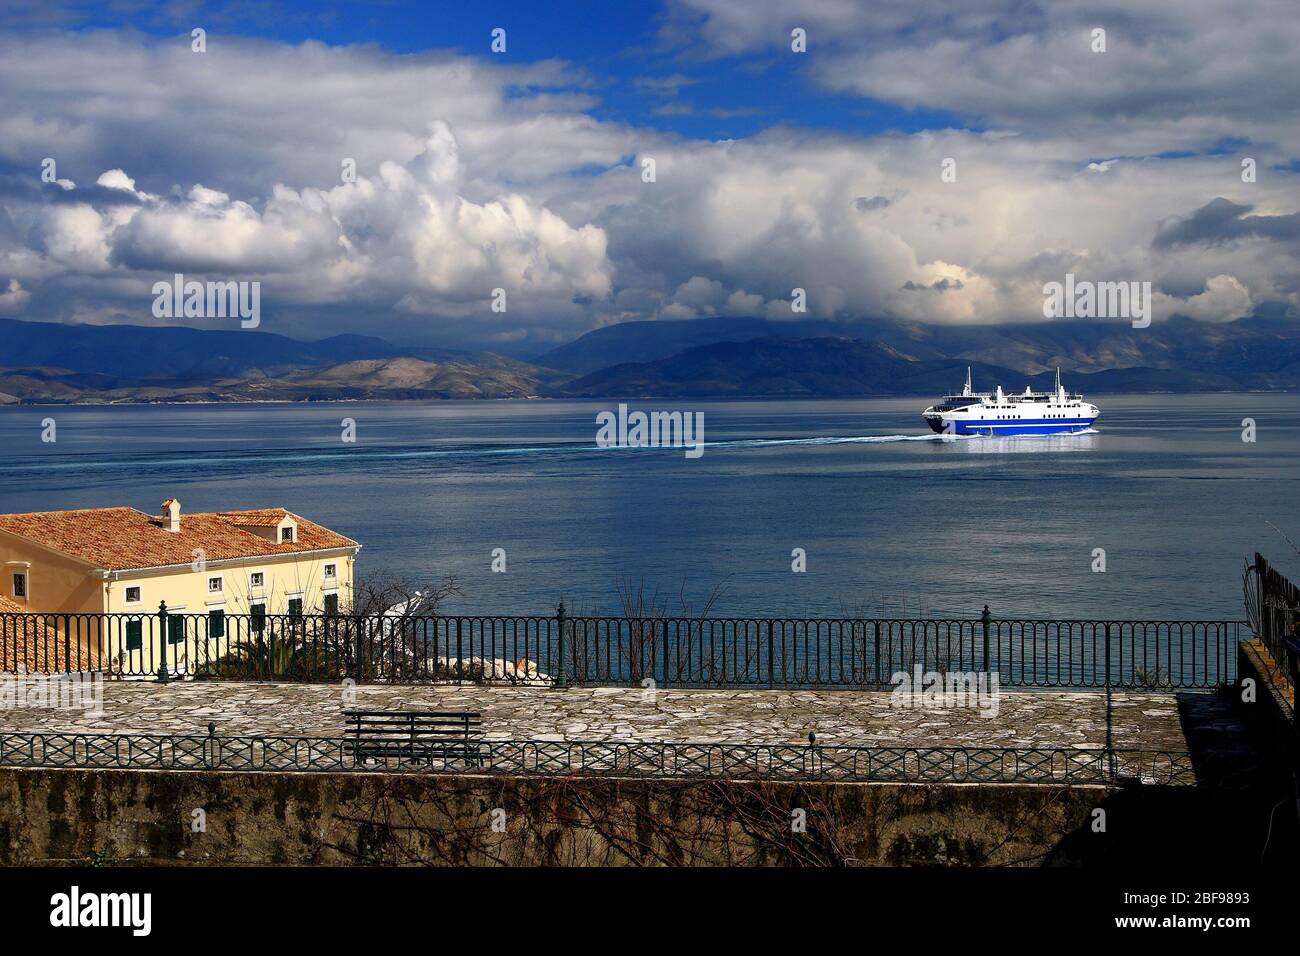 Ship leaving Corfu (Kerkyra) island headint to Igoumenitsa, Ionian Sea, Greece. Stock Photo